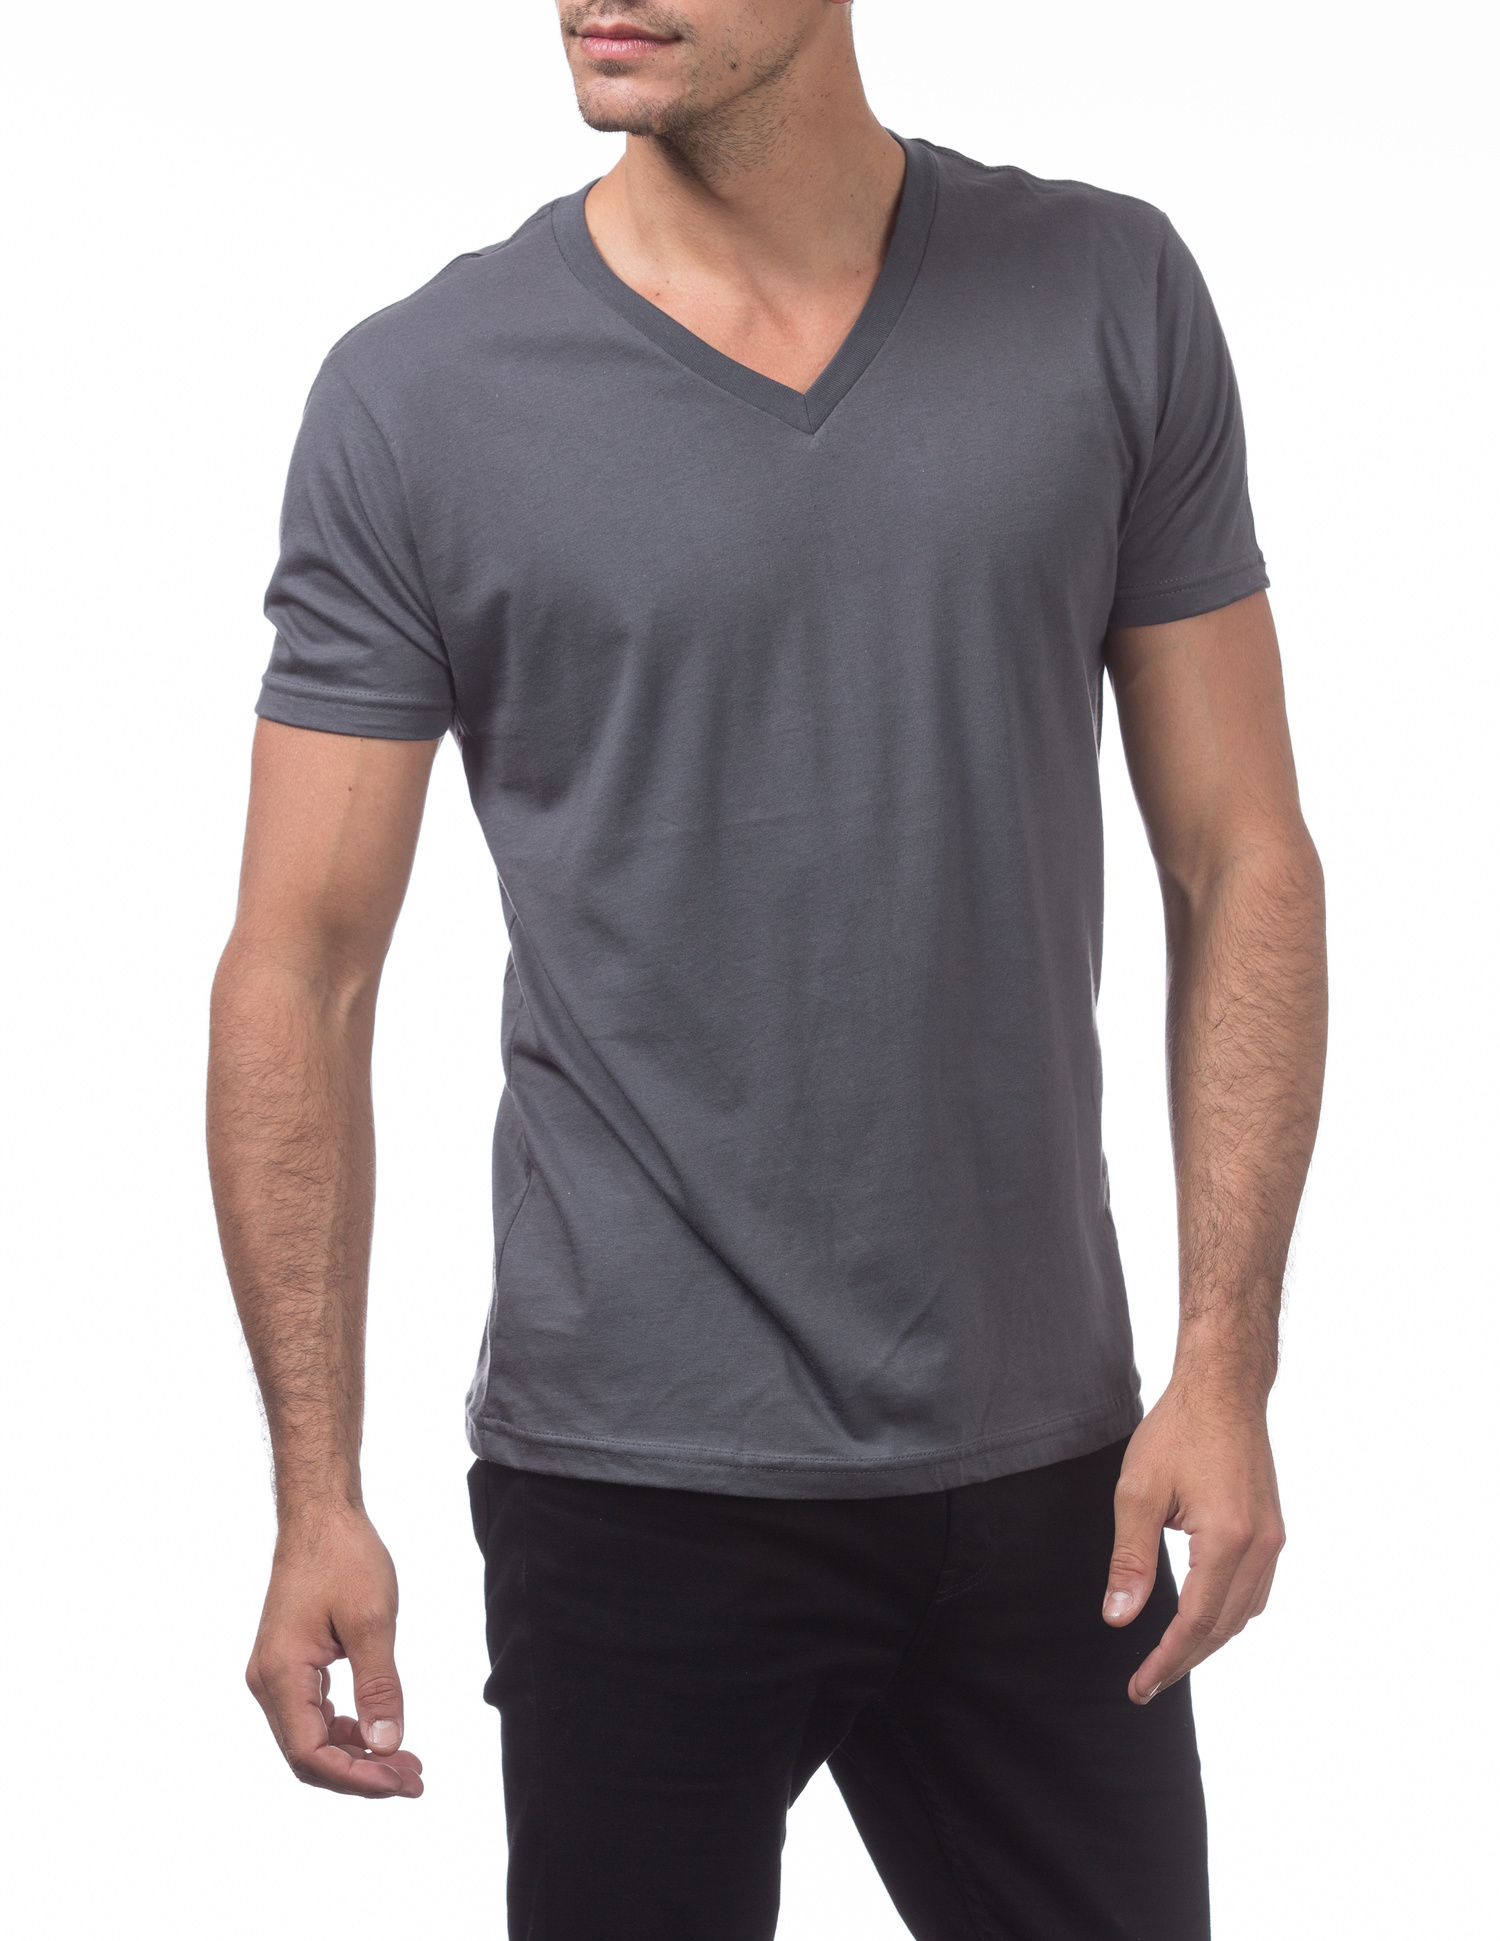 109 GRAPHITE Lightweight Short Sleeve V-Neck T-Shirt